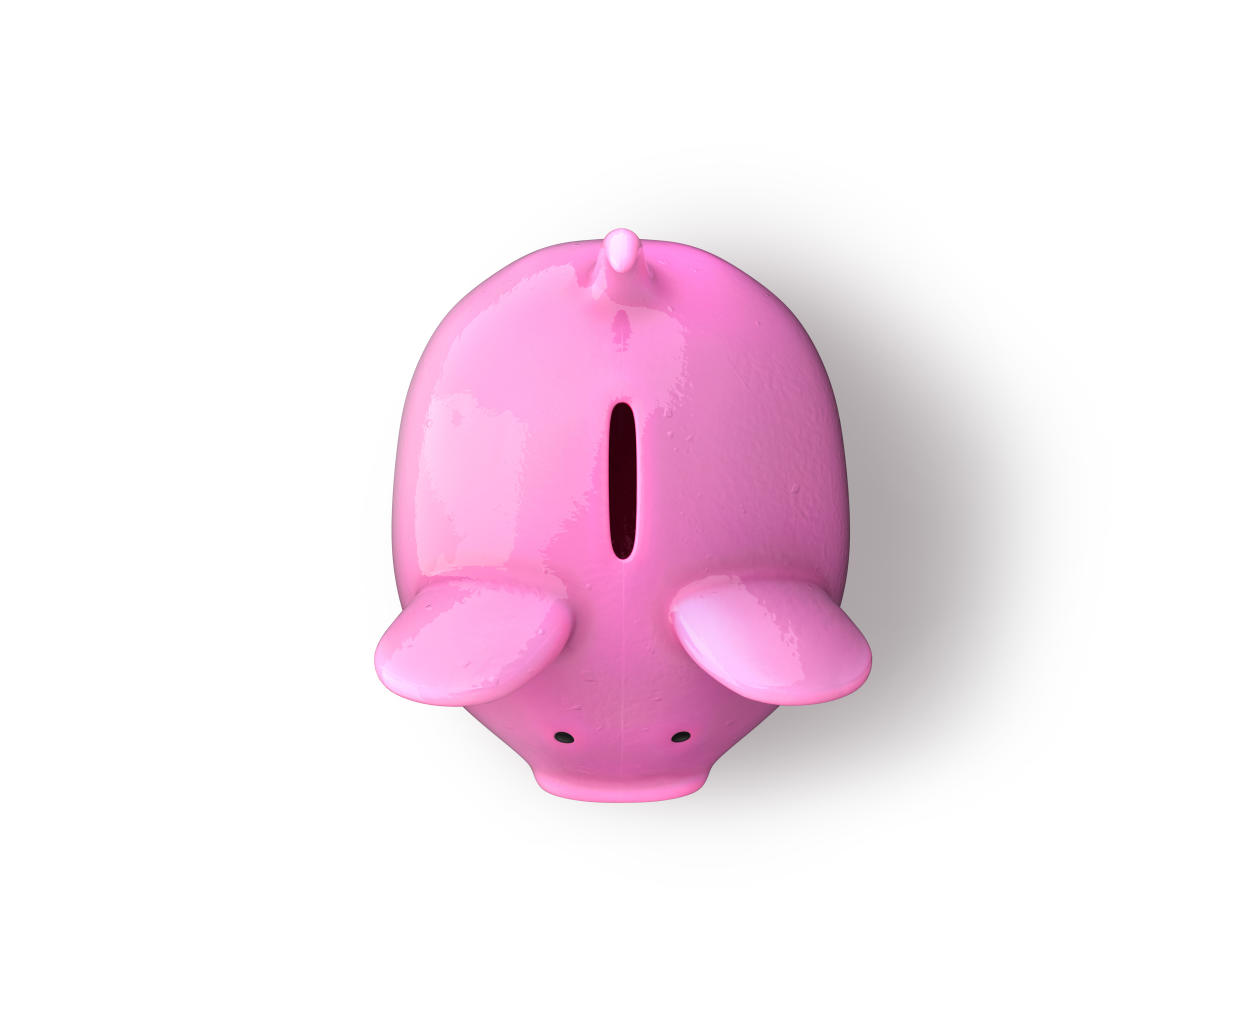 3D illustration of a Piggy bank